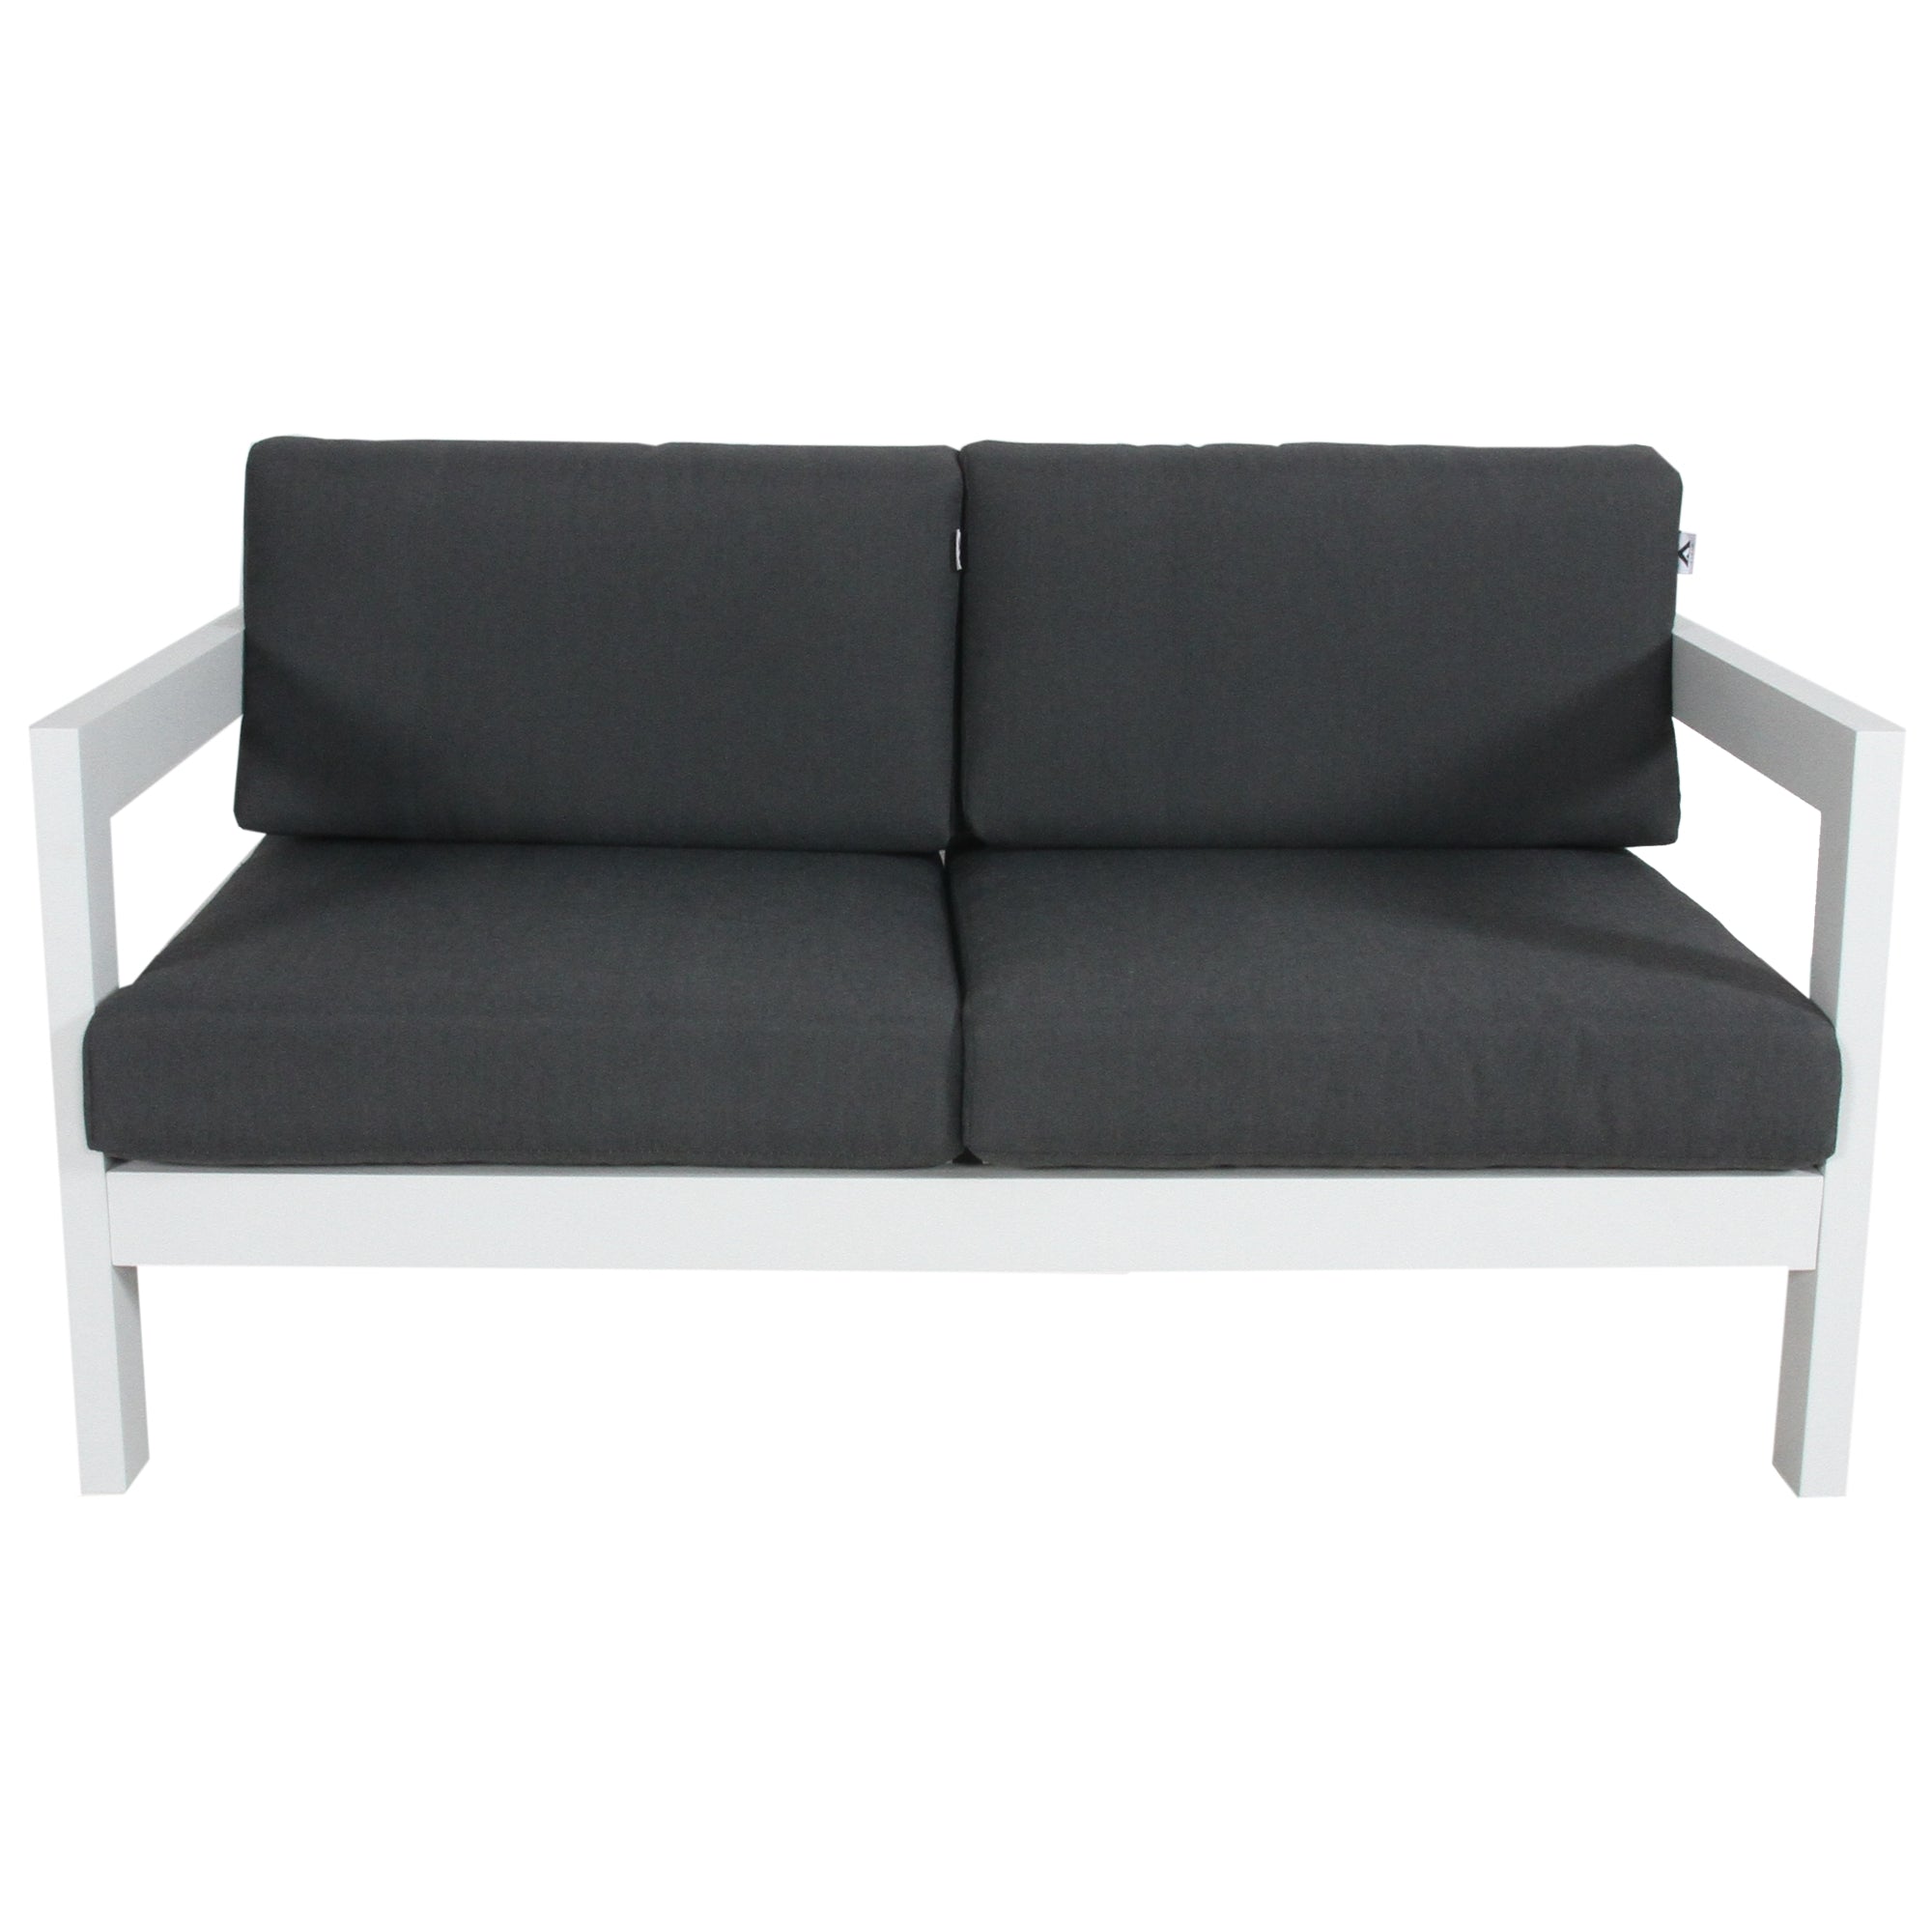 3pc Outdoor Sofa Lounge Set, Aluminium, Weatherproof